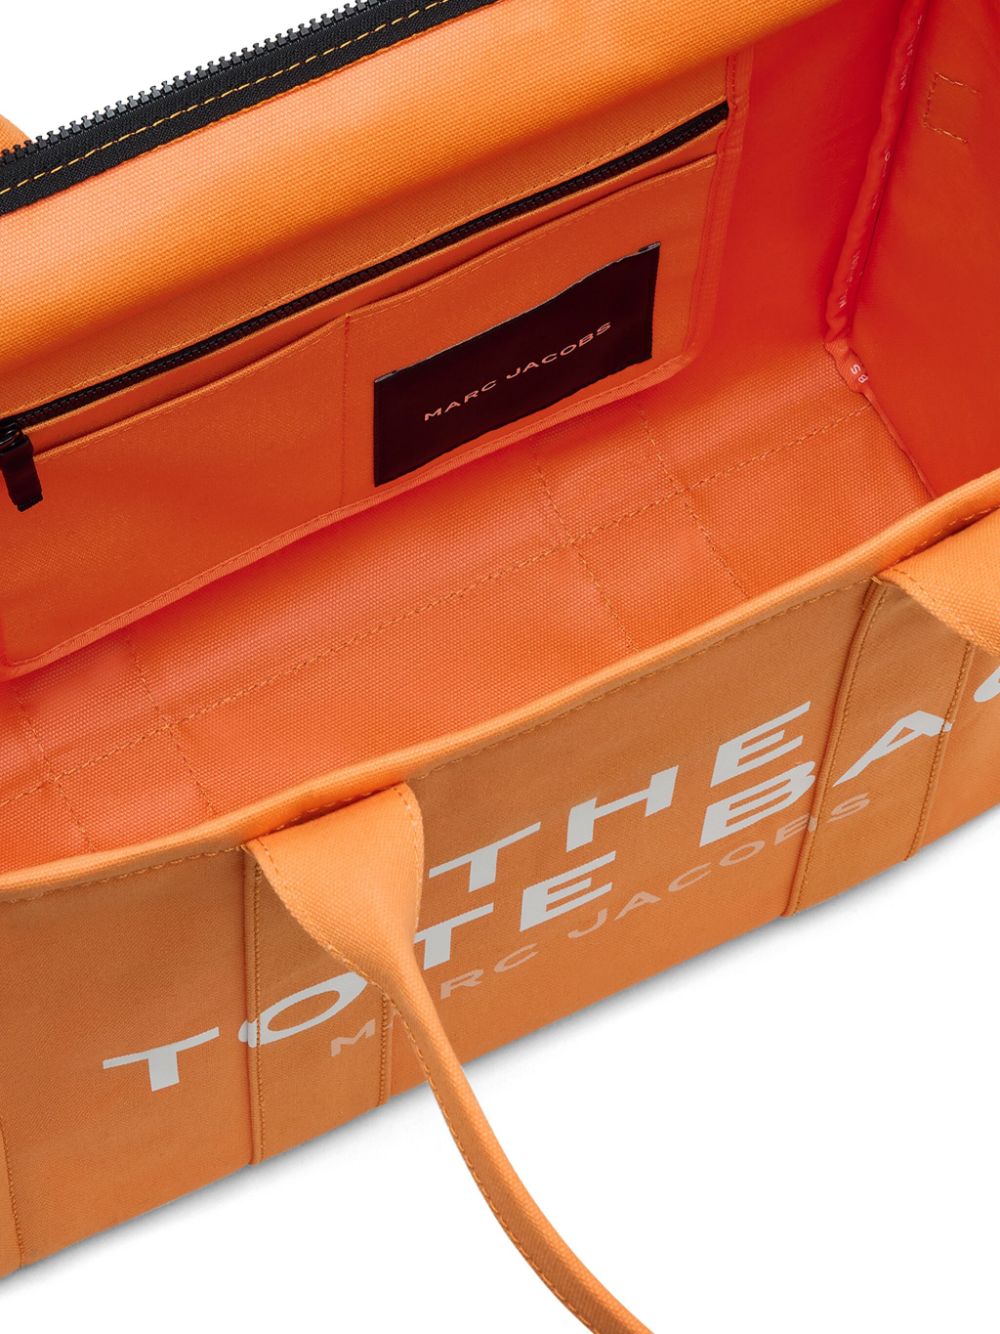 Marc Jacobs Bags.. Orange